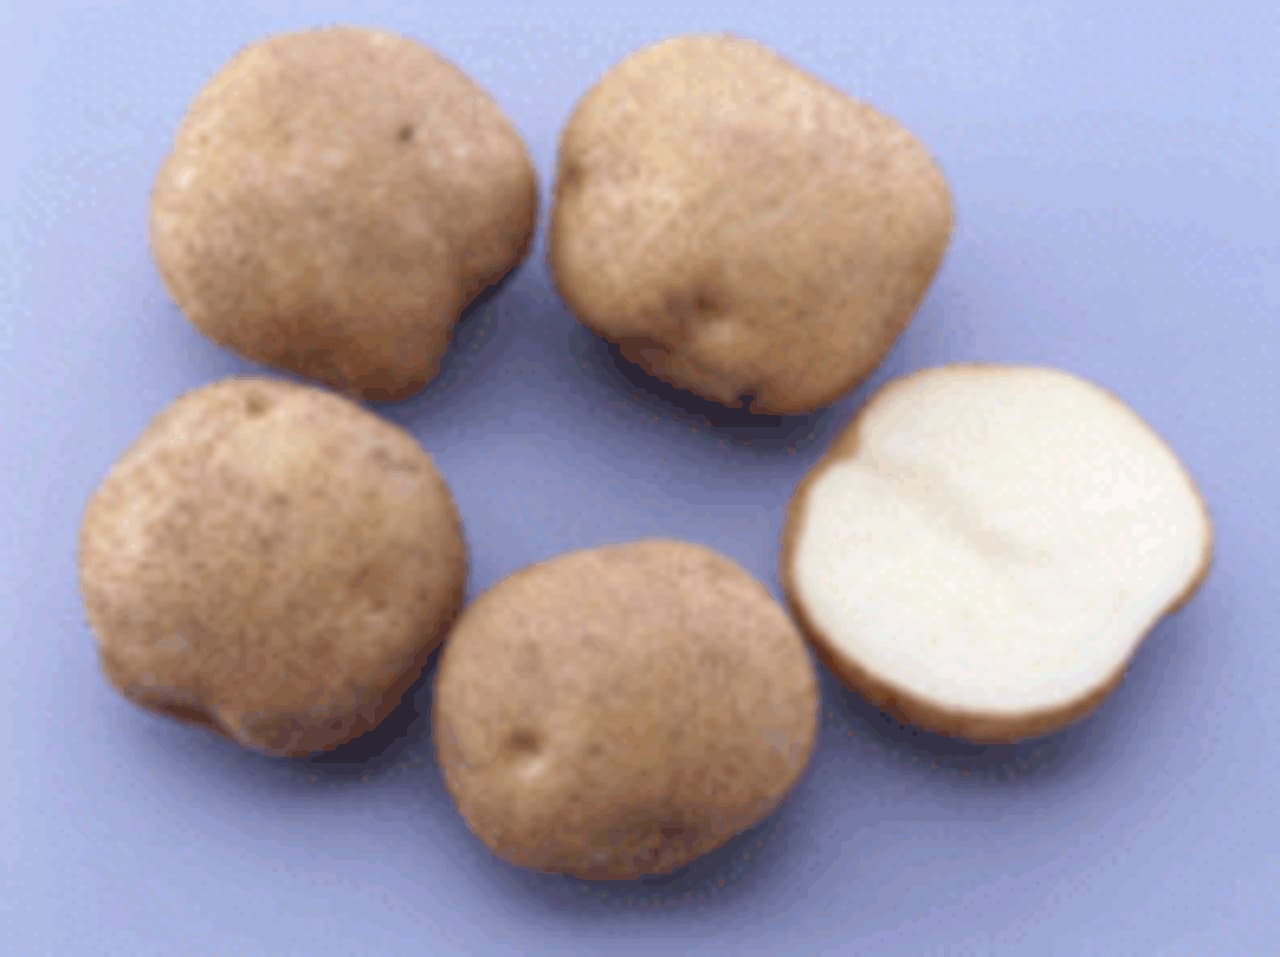 "The Potato Flower Algae Salt Flavor" "The Potato Onion Pepper Flavor" using Calbee domestic potatoes